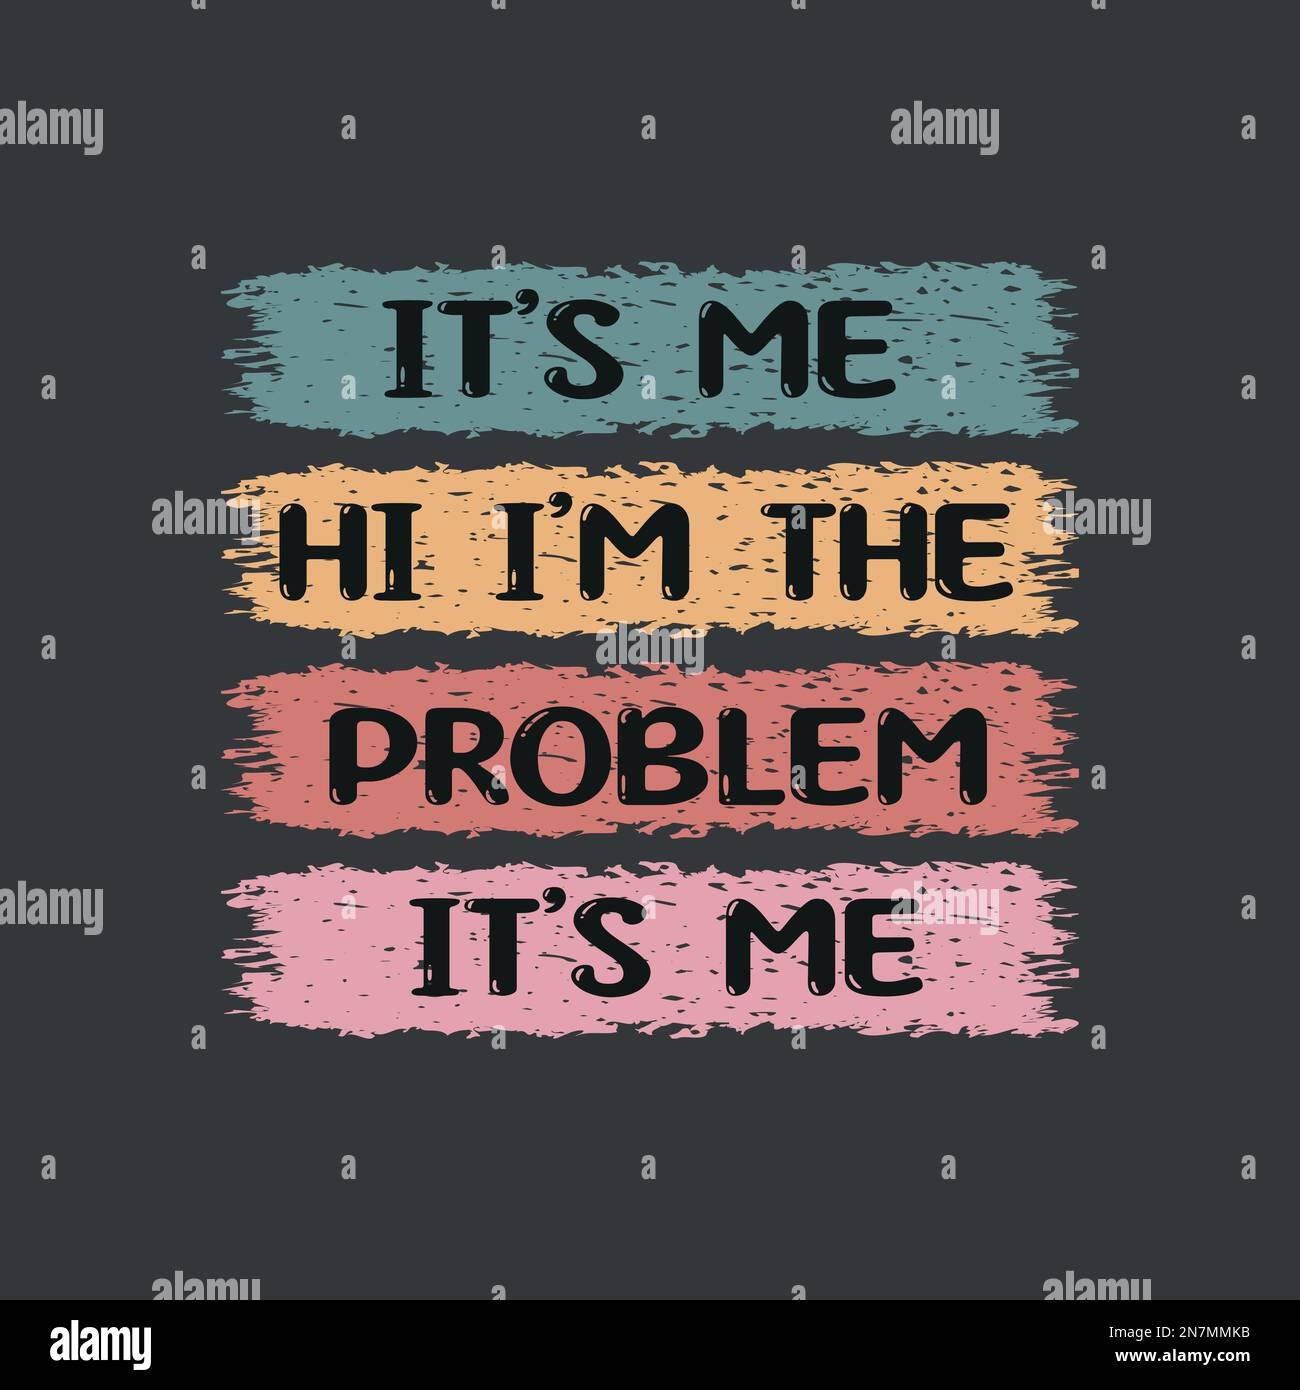 It's me Hi! I'm the problem It's me